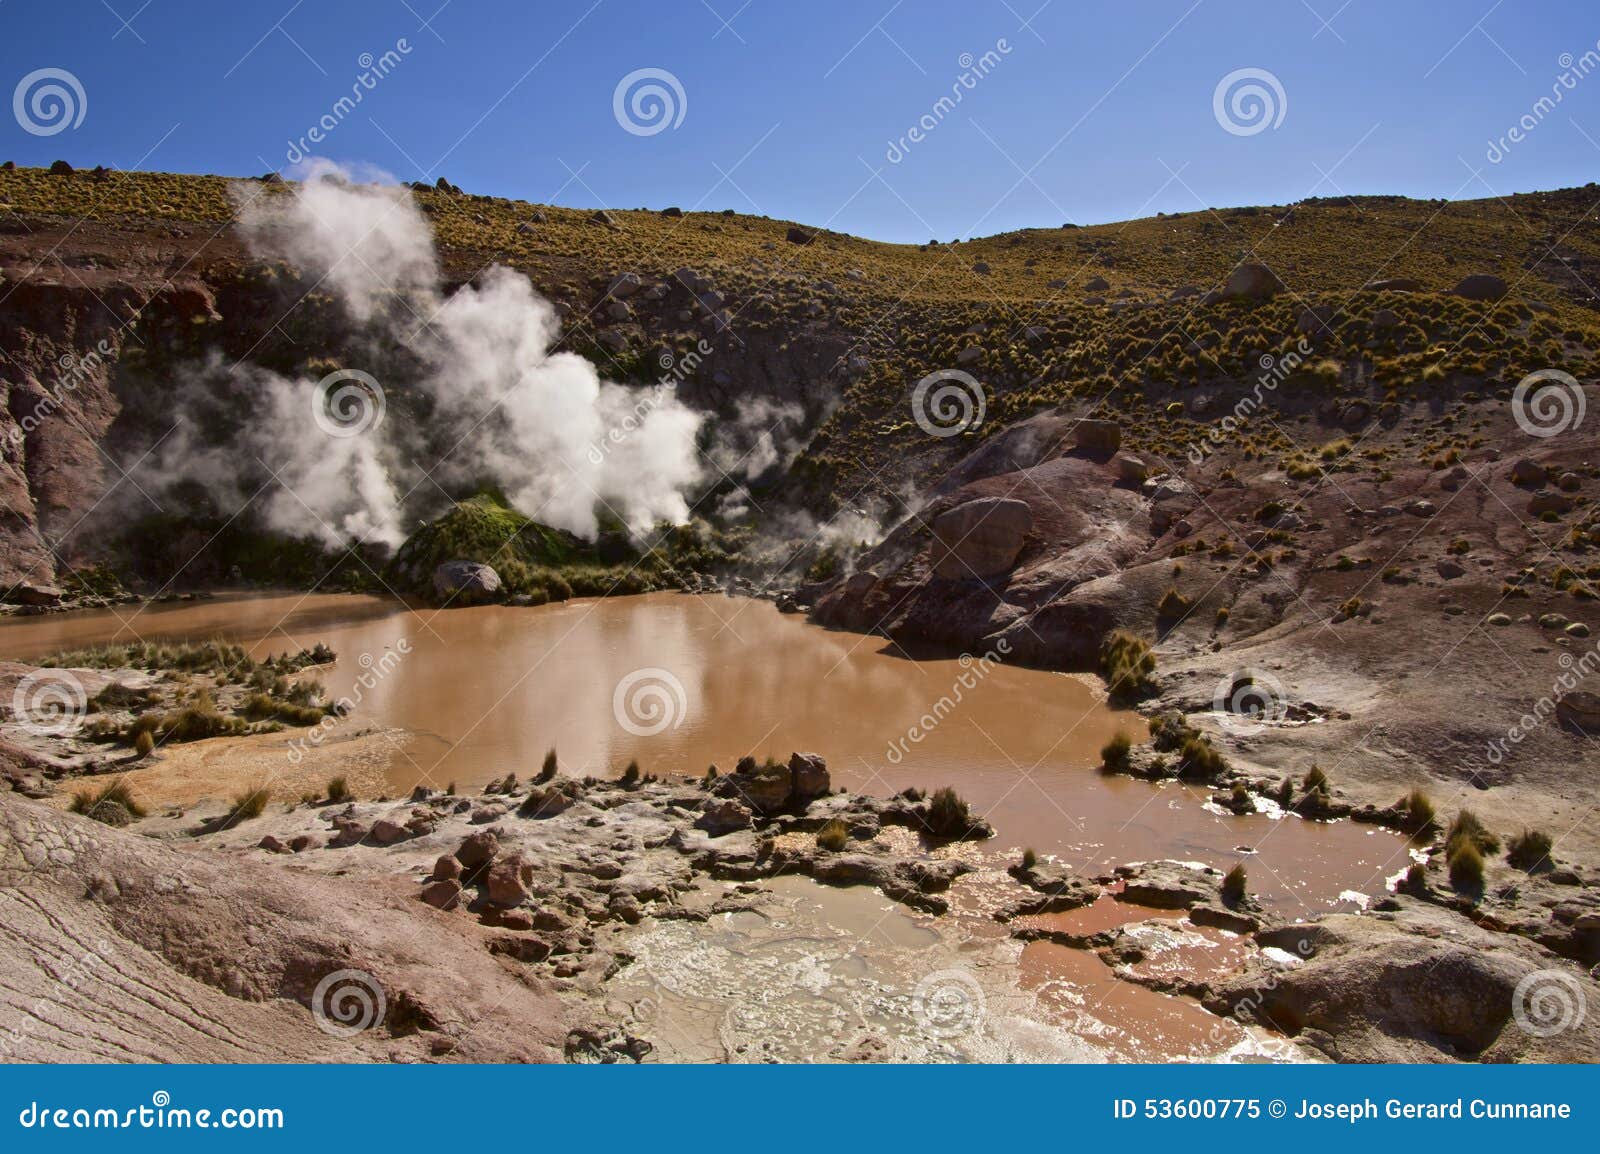 steam venting from mud pools in atacama desert